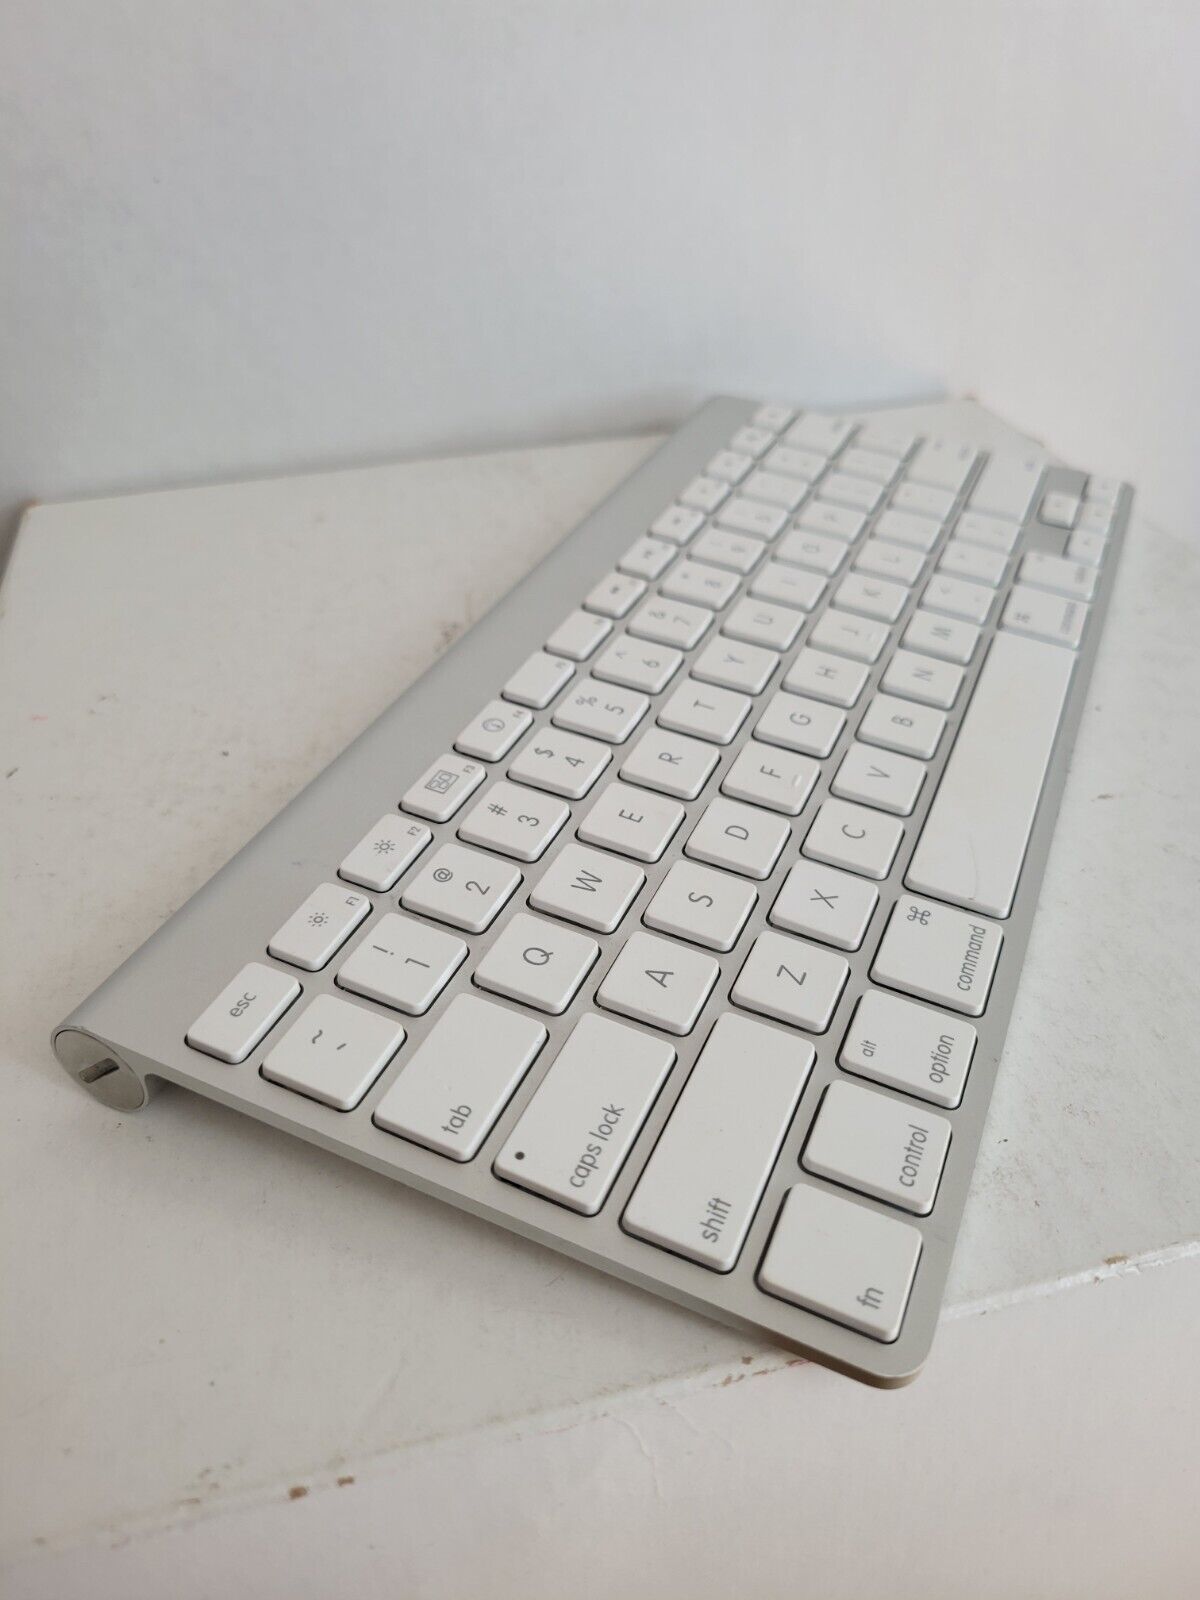 Apple A1314 Bluetooth Wireless Silver Slim Magic Keyboard iMac Tested Working